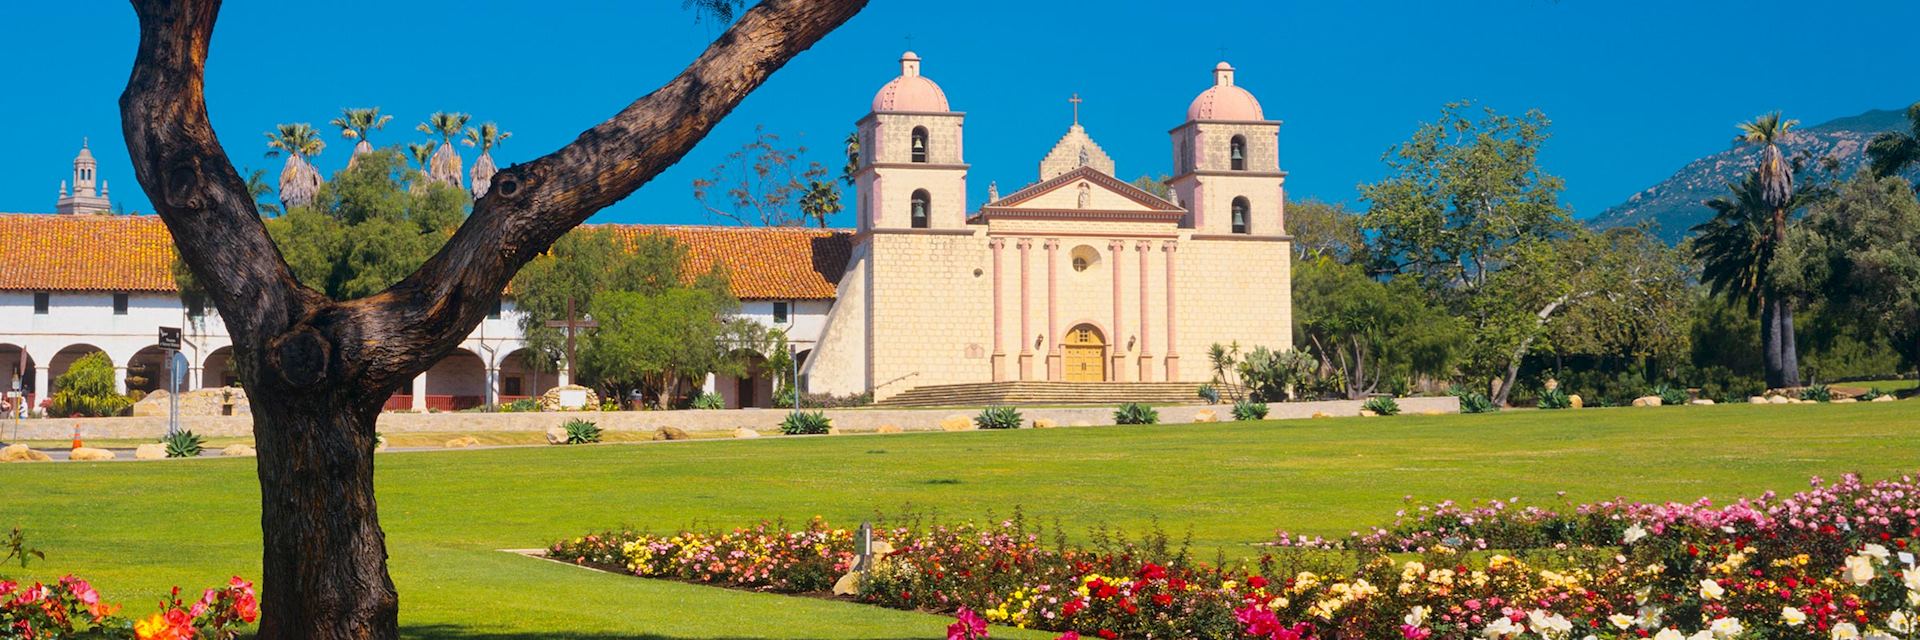 Santa Barbara Mission, California, USA